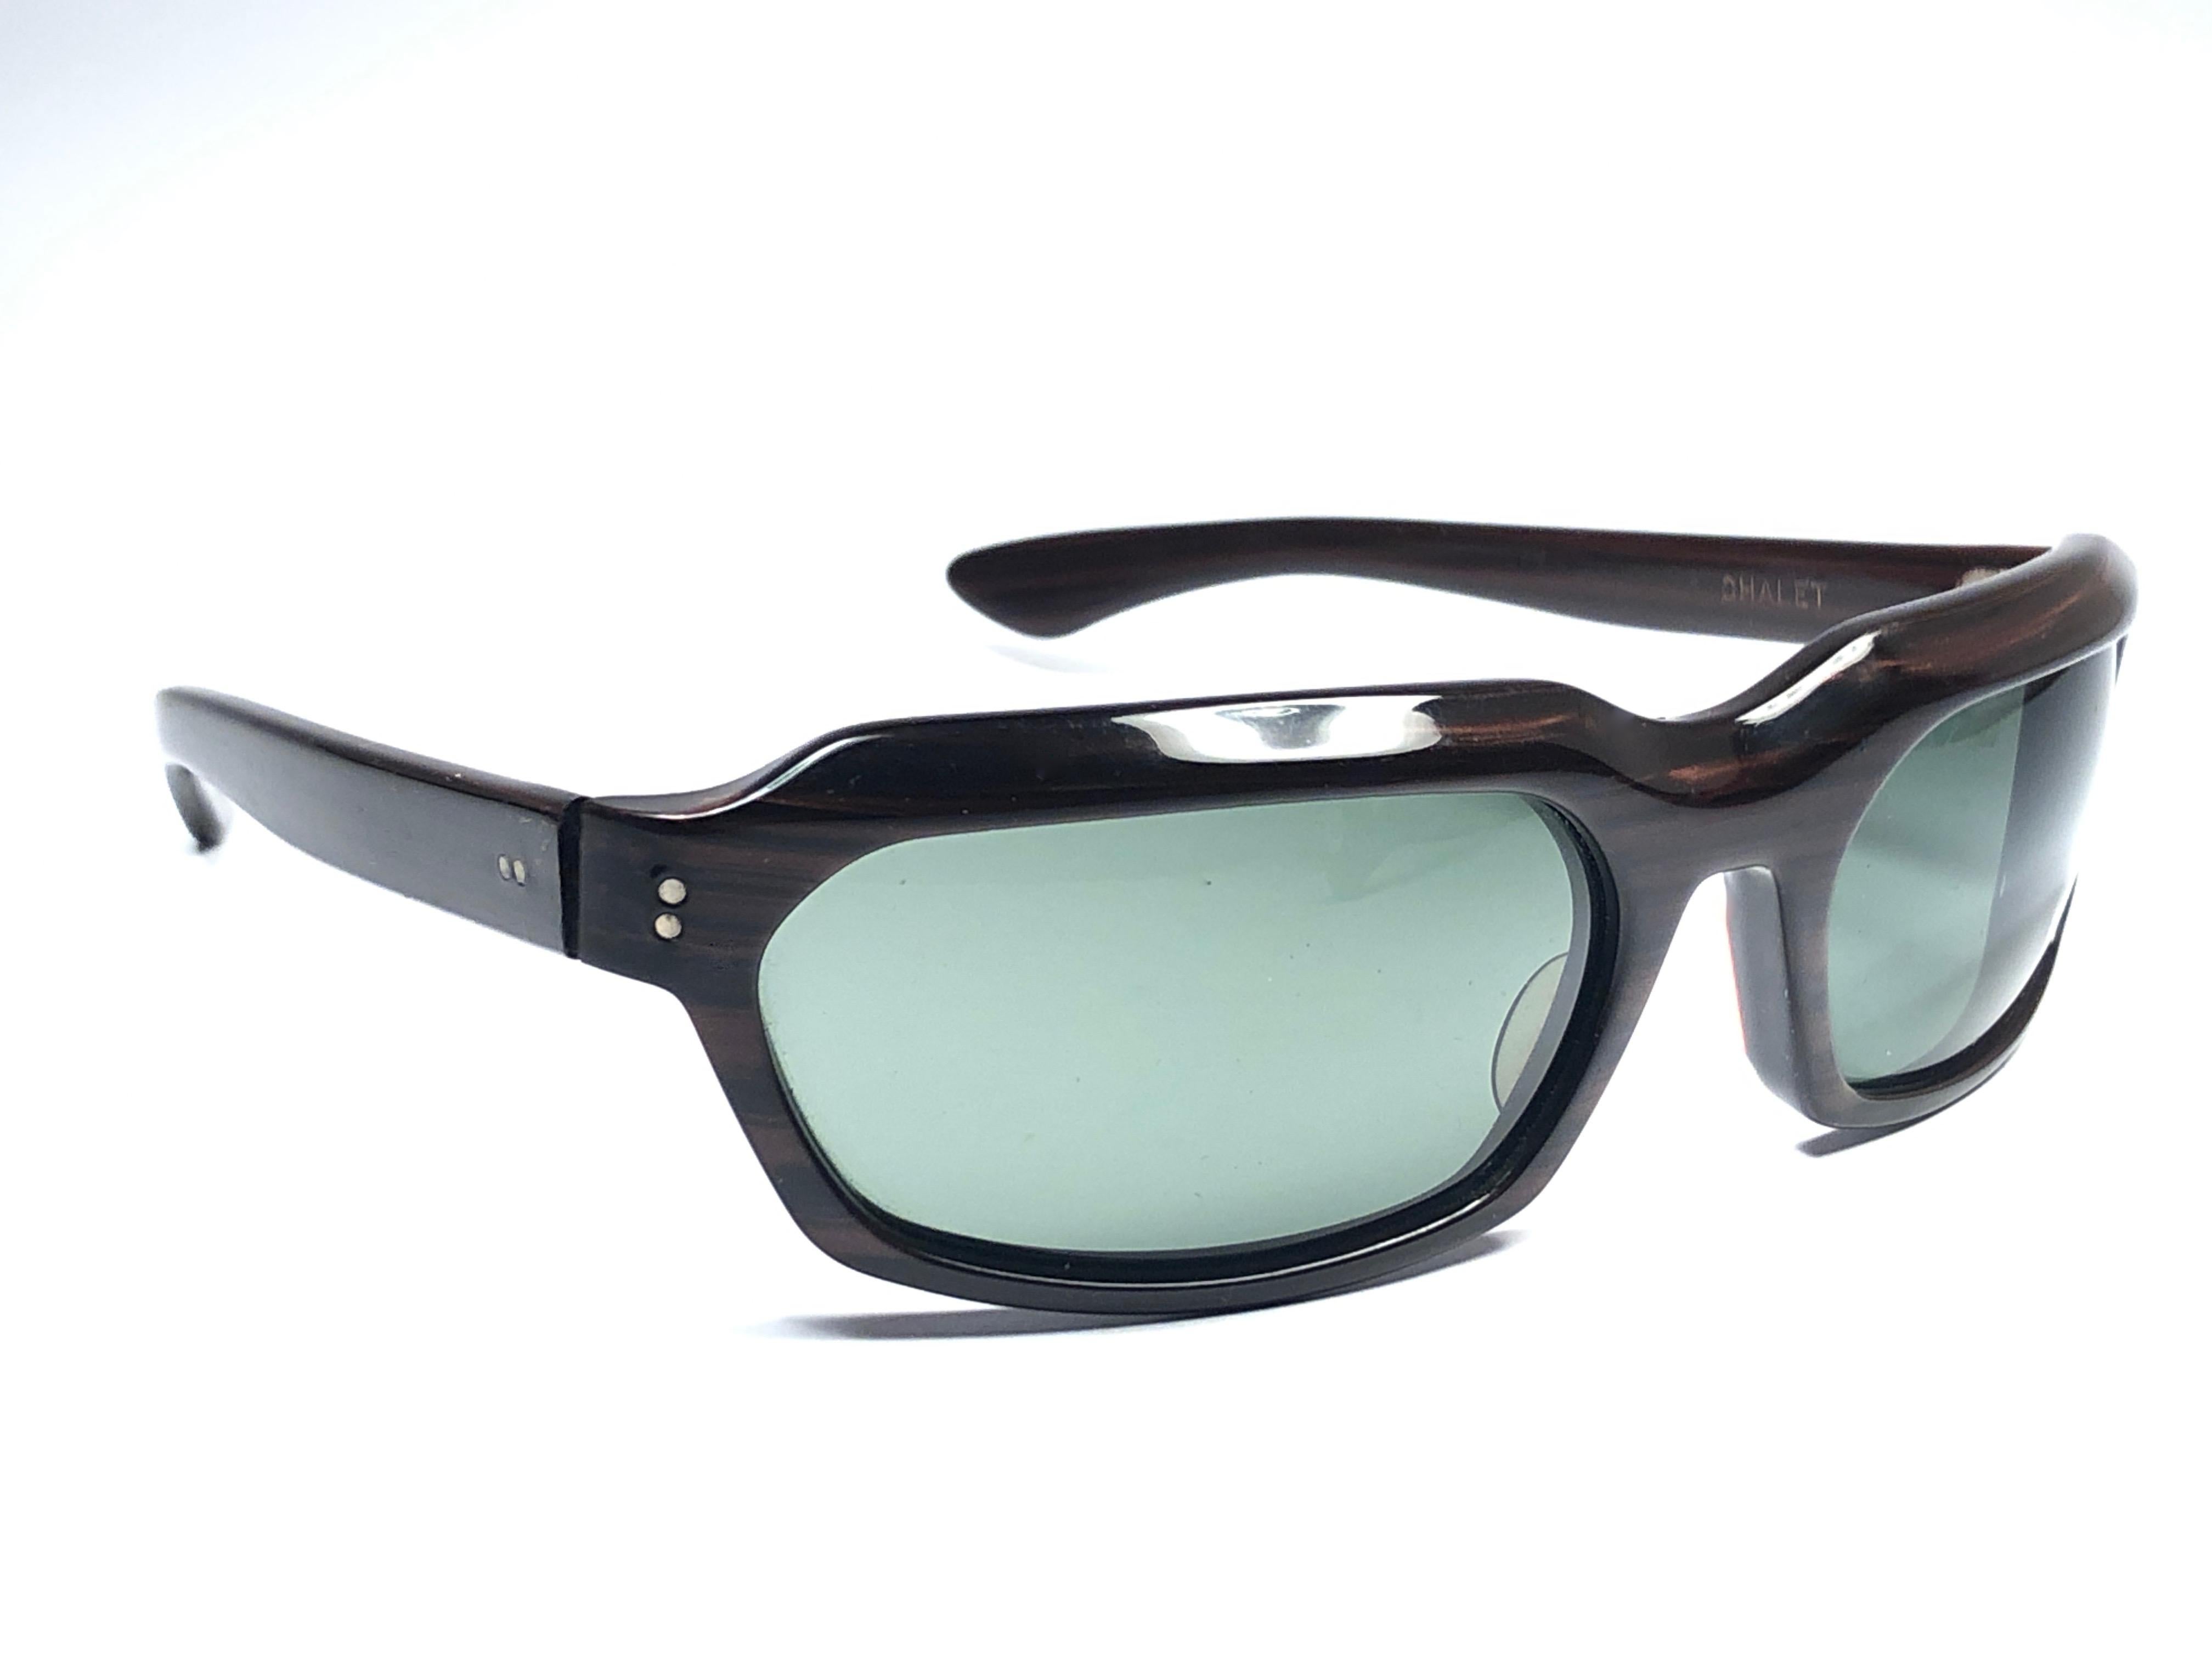 1960 ray ban sunglasses